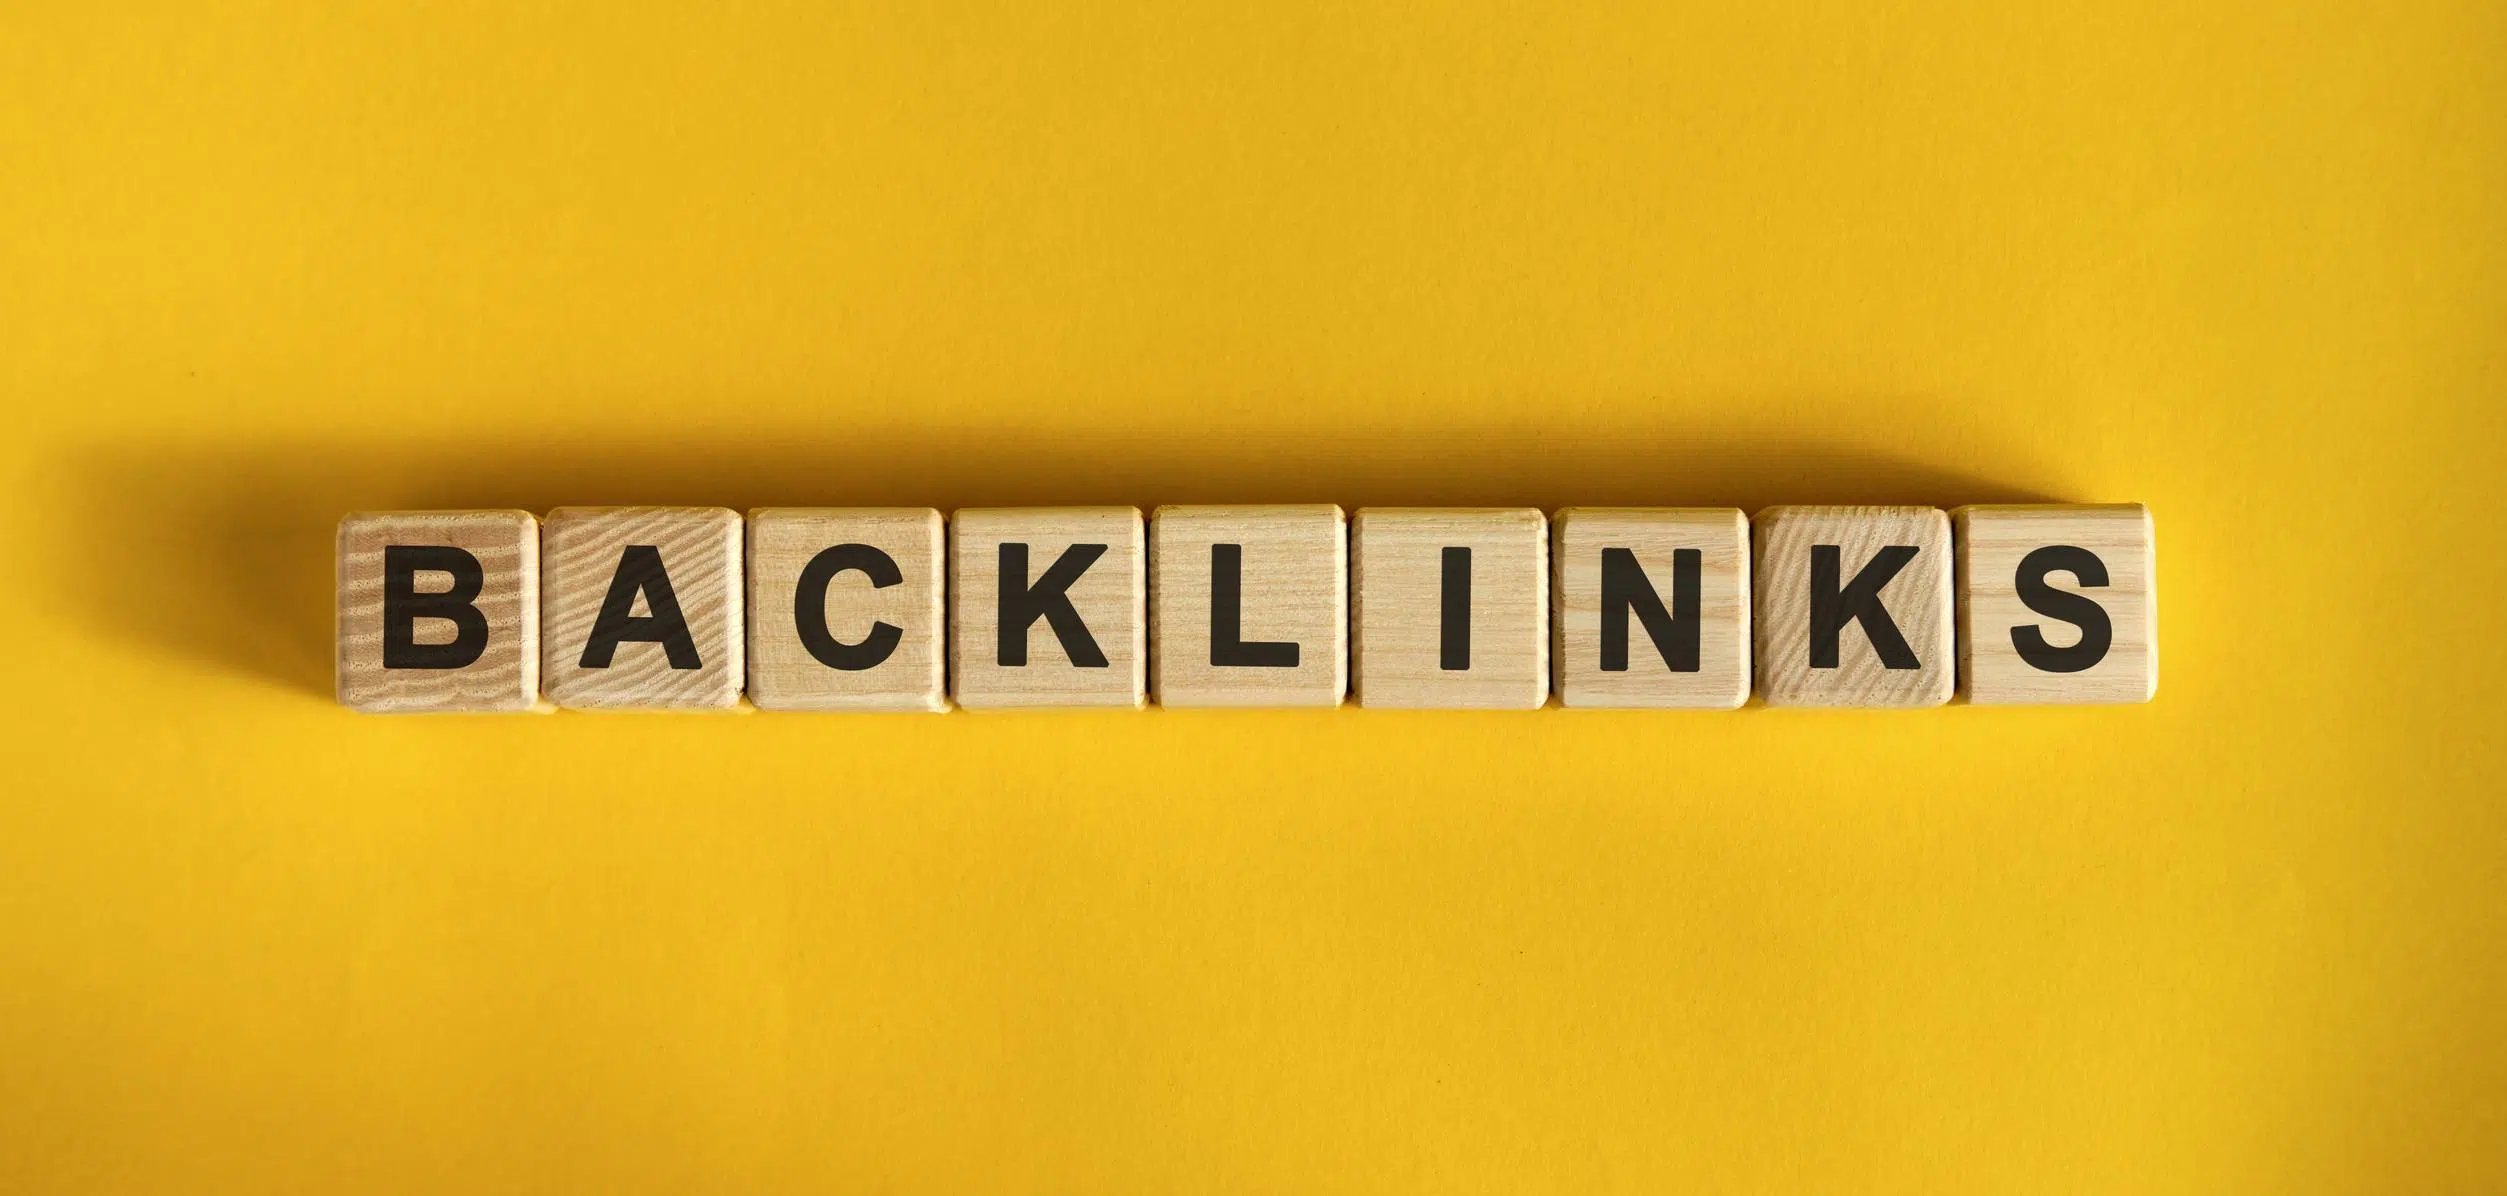 backlinks, stratégie de netlinking